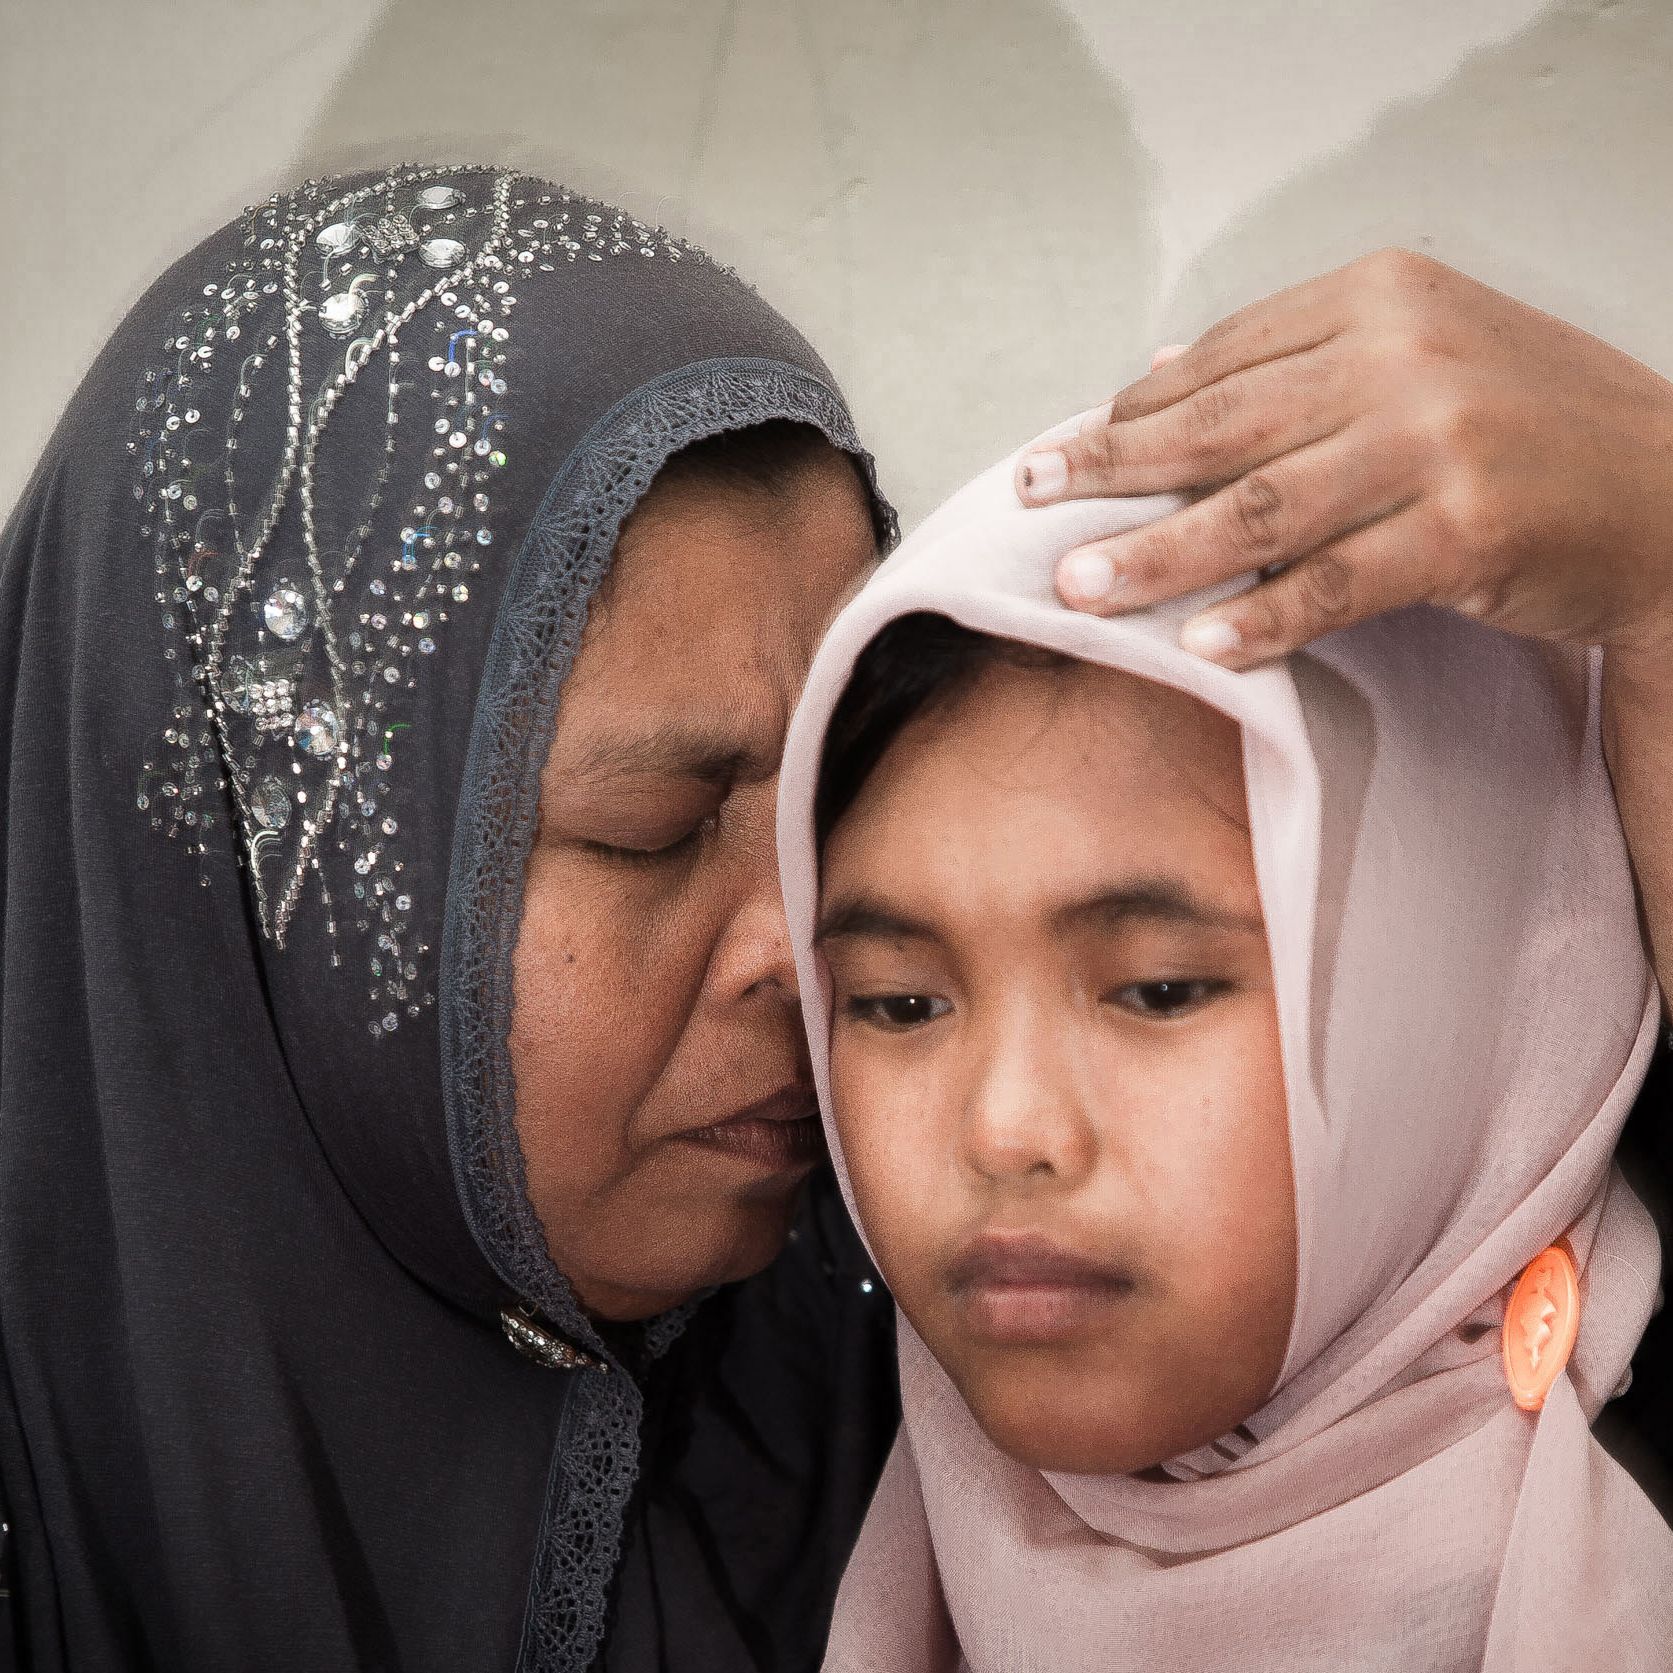 Indonesia Tsunami victim reunited with family